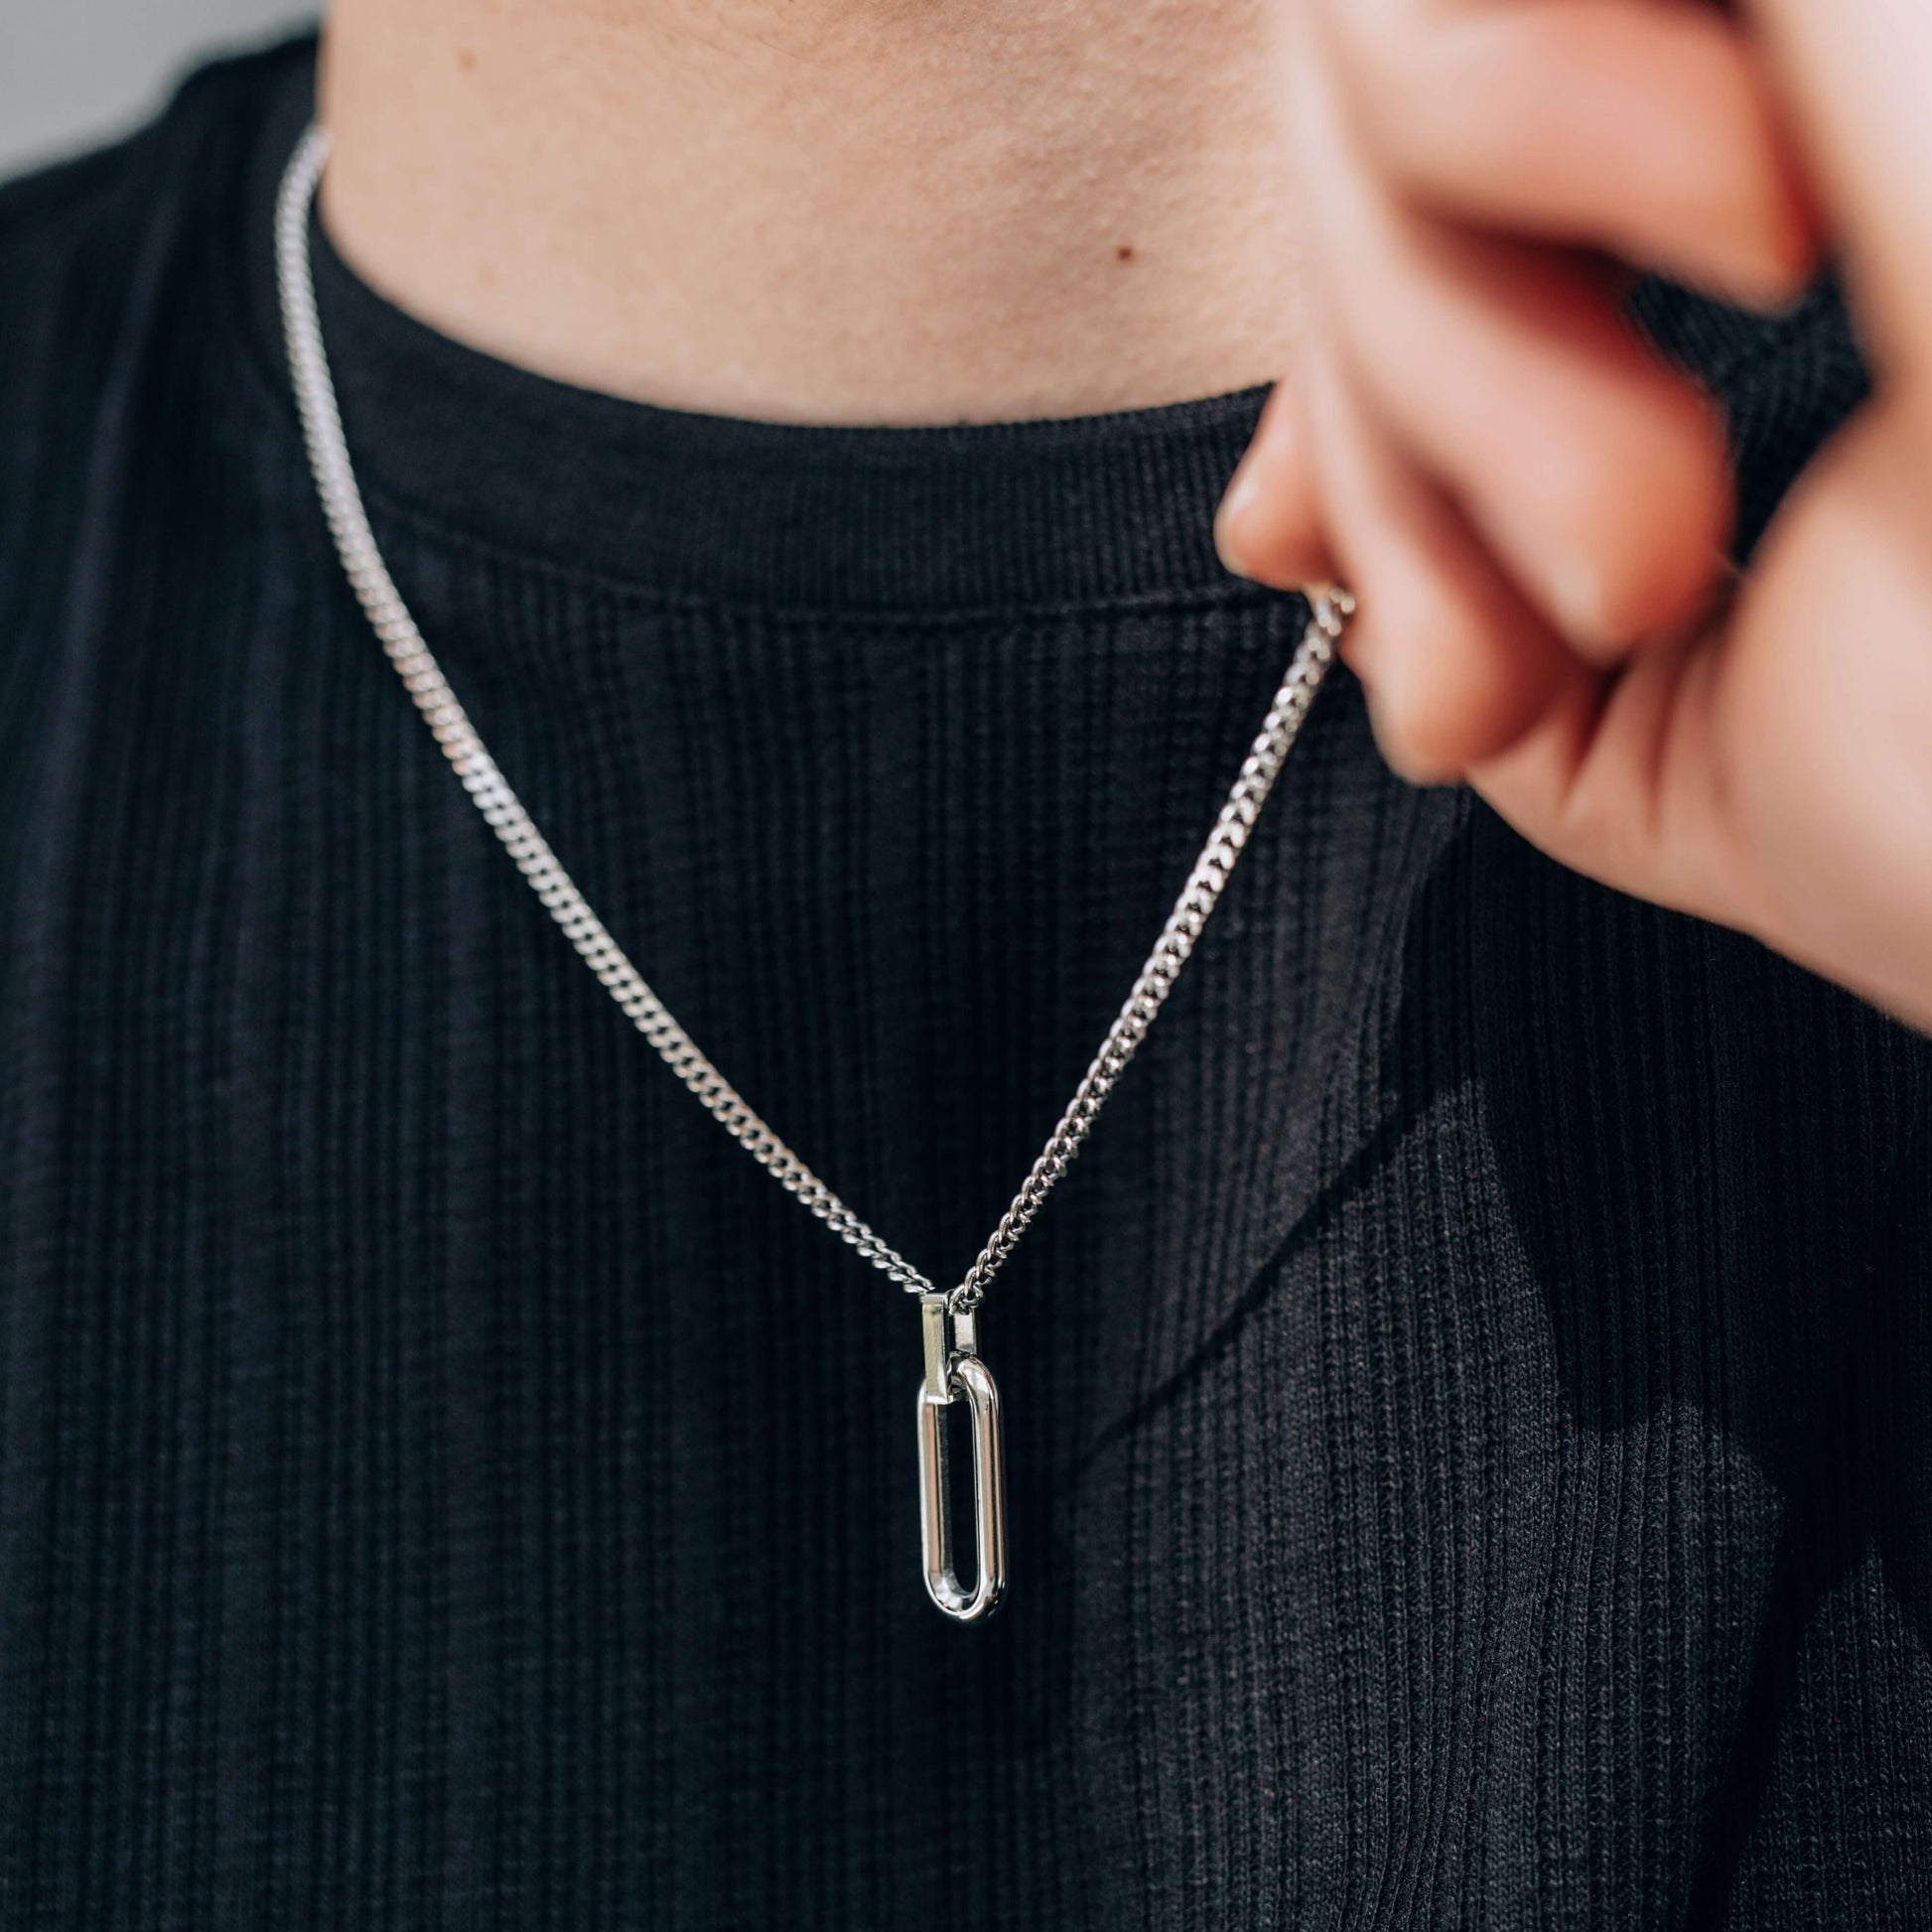 Silver Oval Pendant Necklace 3mm Curb Chain For Men or Women - Boutique Wear RENN - Pendant necklace